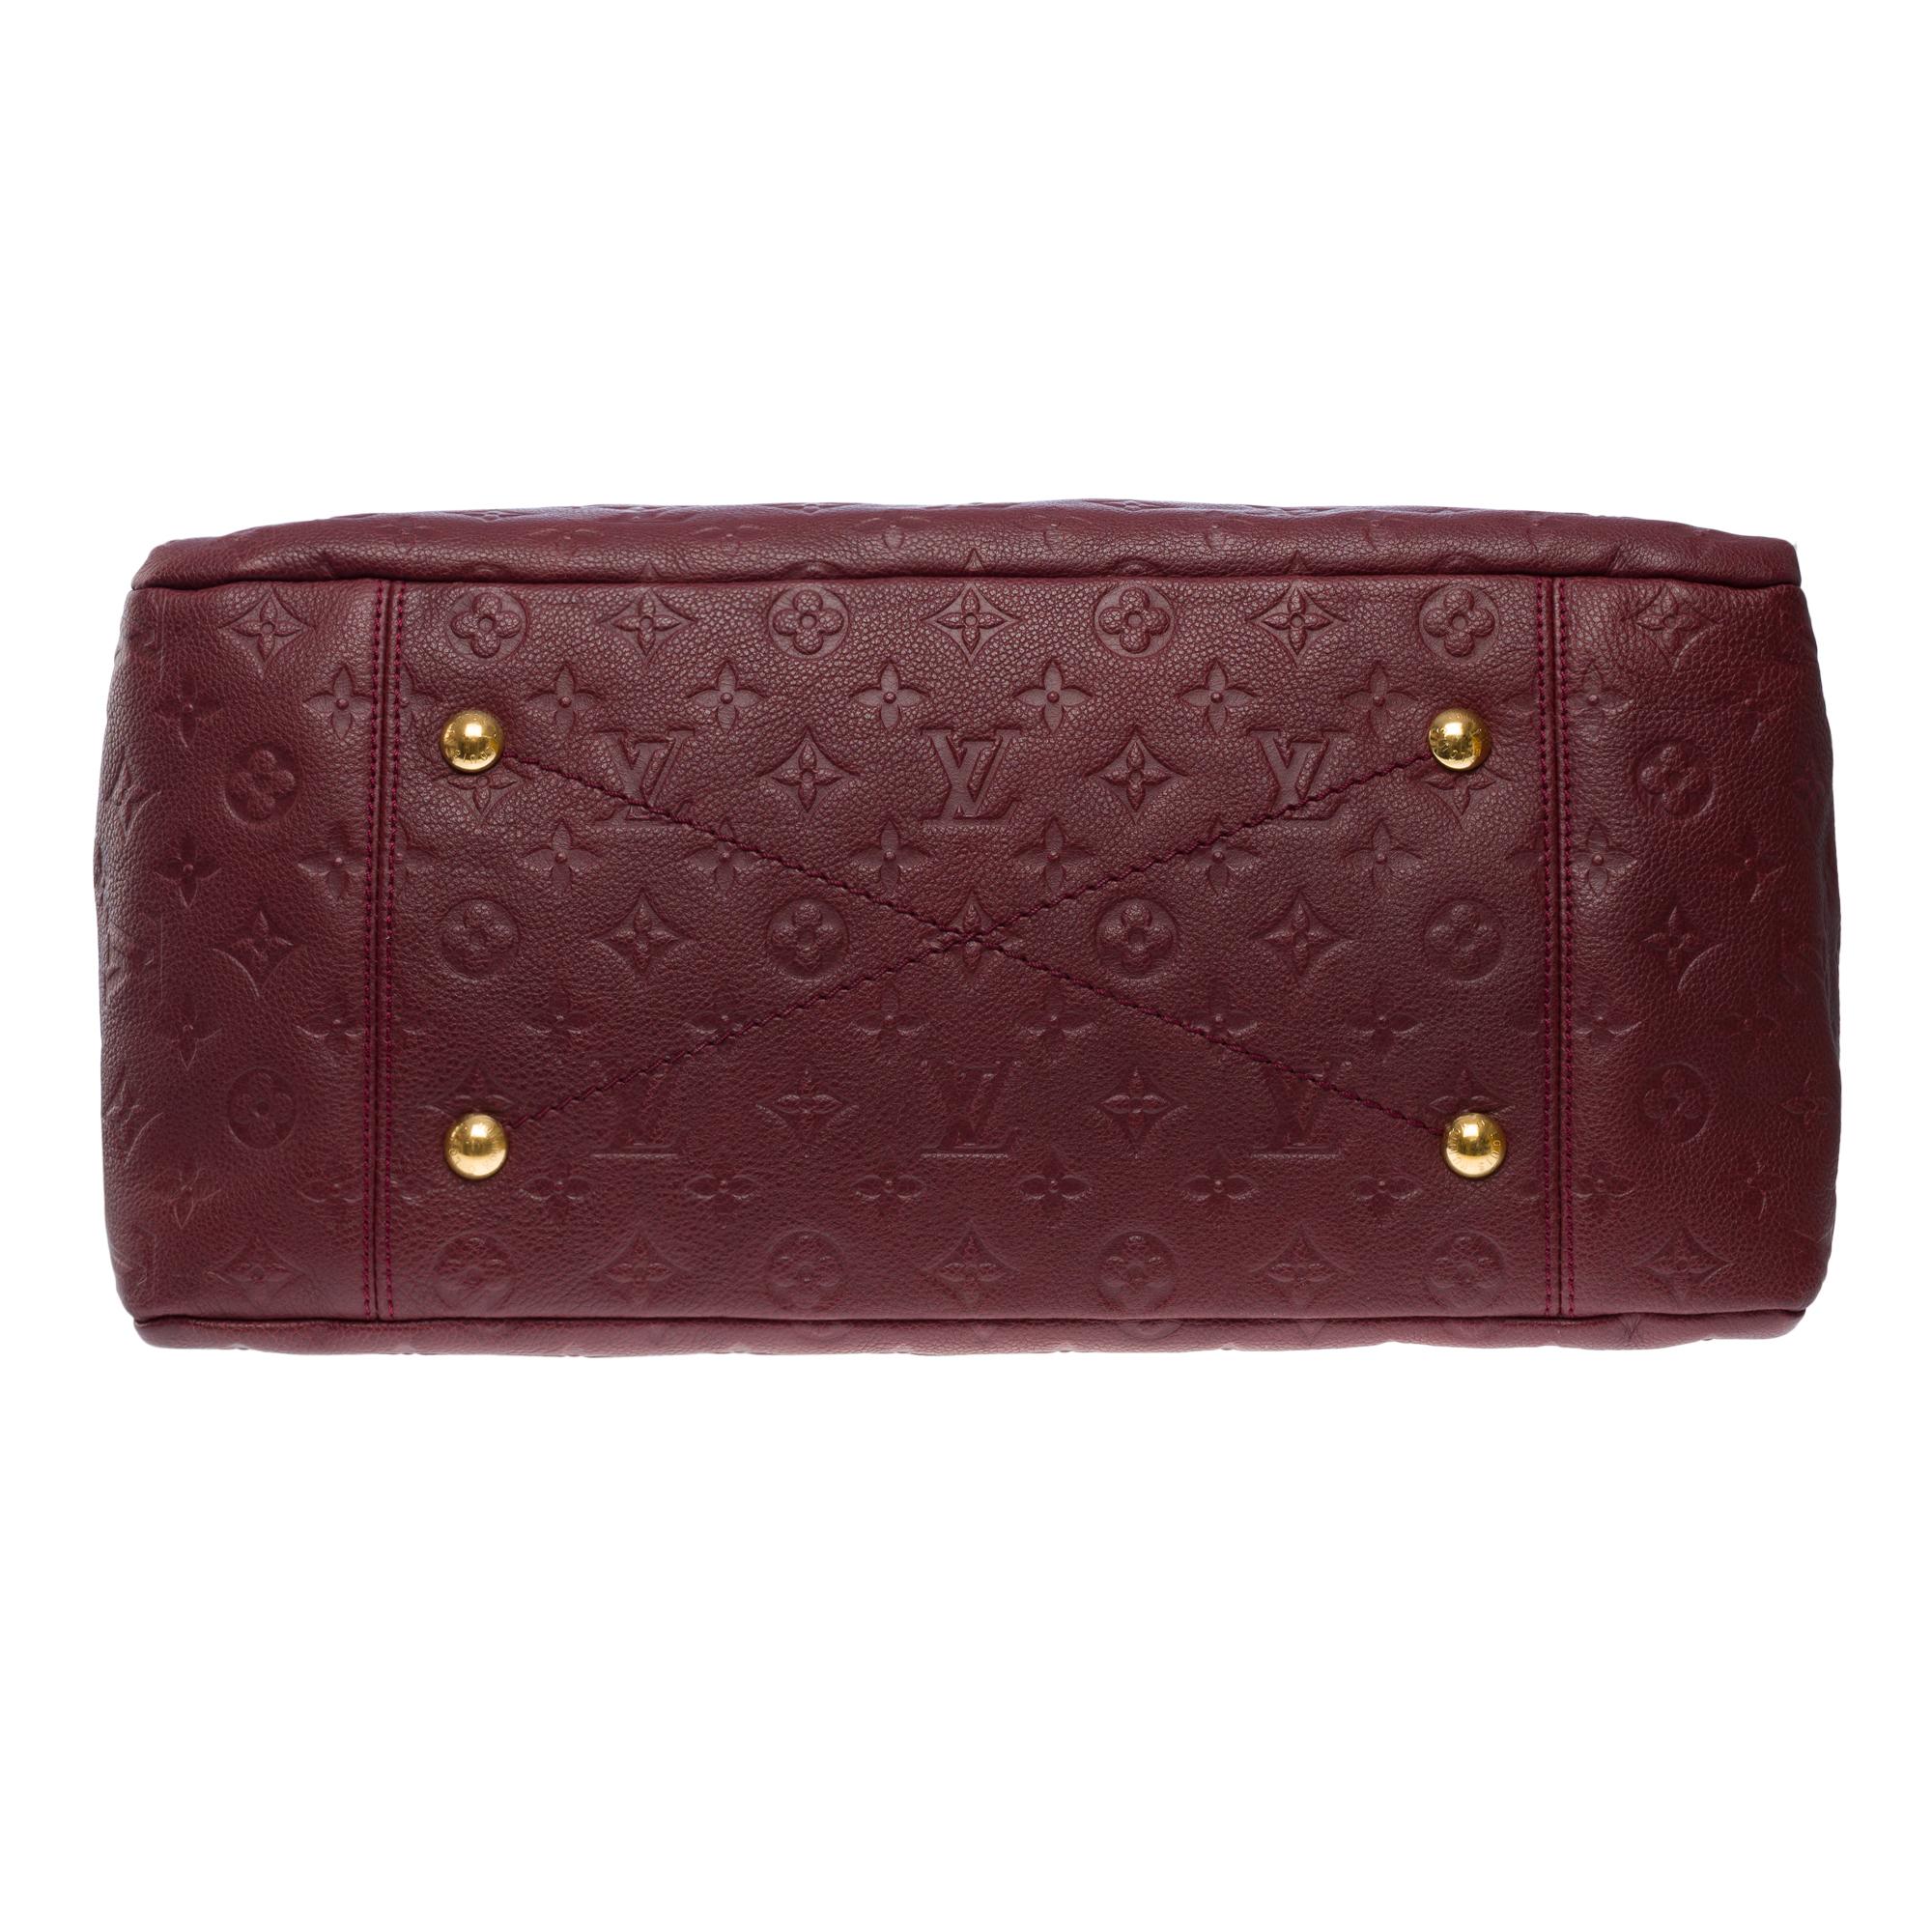 Louis Vuitton Artsy MM Hobo bag in Burgundy Monogram calfskin leather, GHW For Sale 6